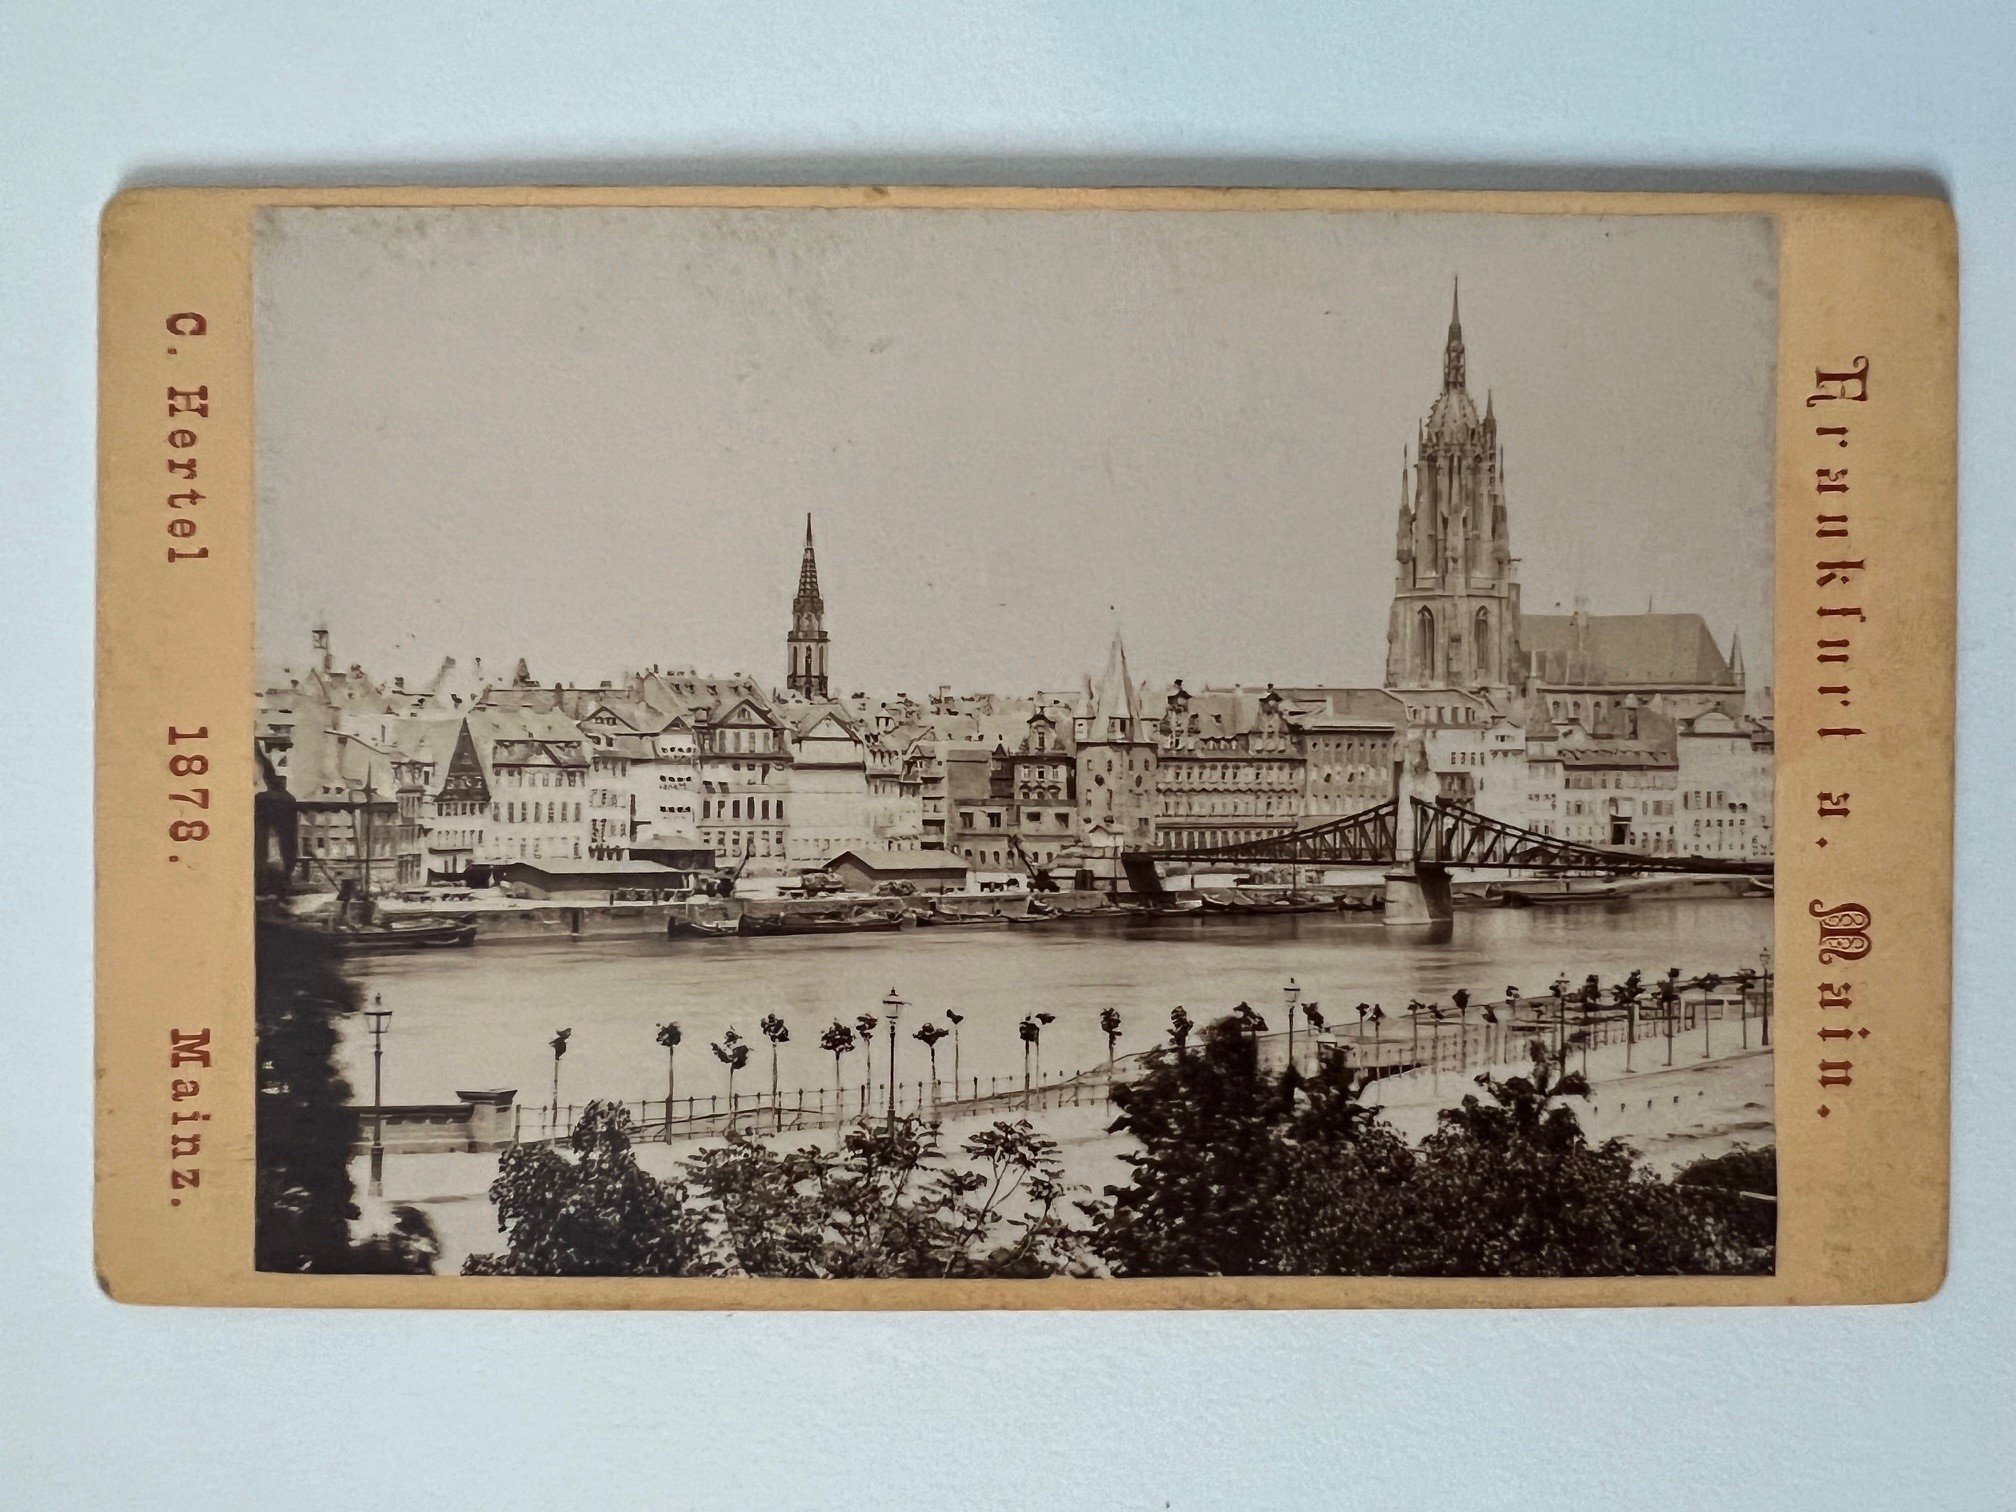 CdV, Carl Hertel, Frankfurt, Main-Panorama, 1878. (Taunus-Rhein-Main - Regionalgeschichtliche Sammlung Dr. Stefan Naas CC BY-NC-SA)